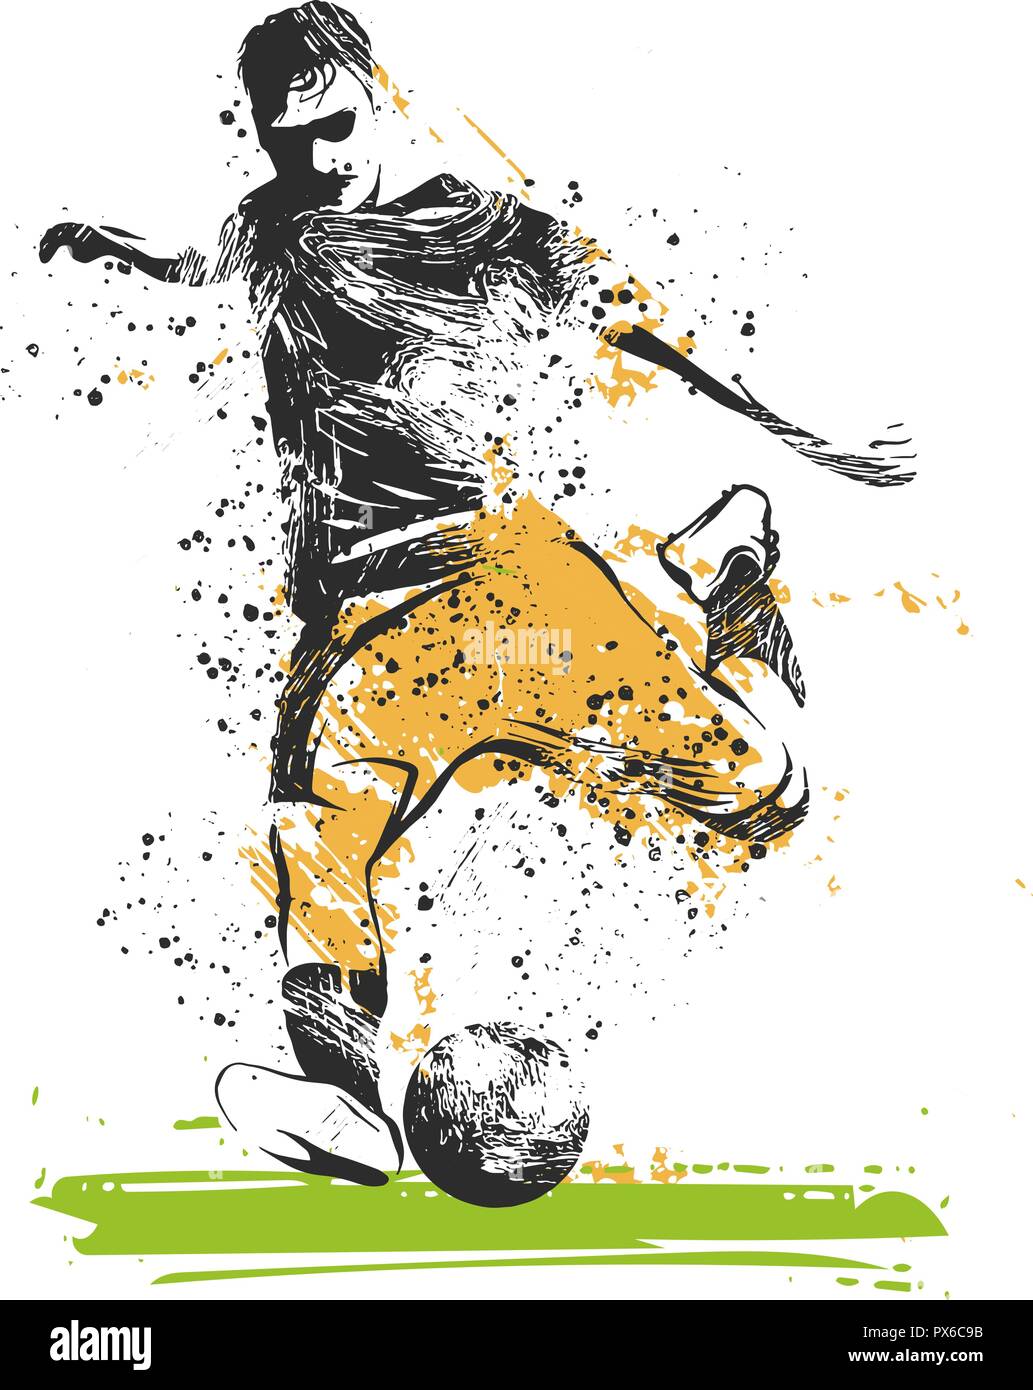 Soccer player kicking ball. illustration du sport Illustration de Vecteur